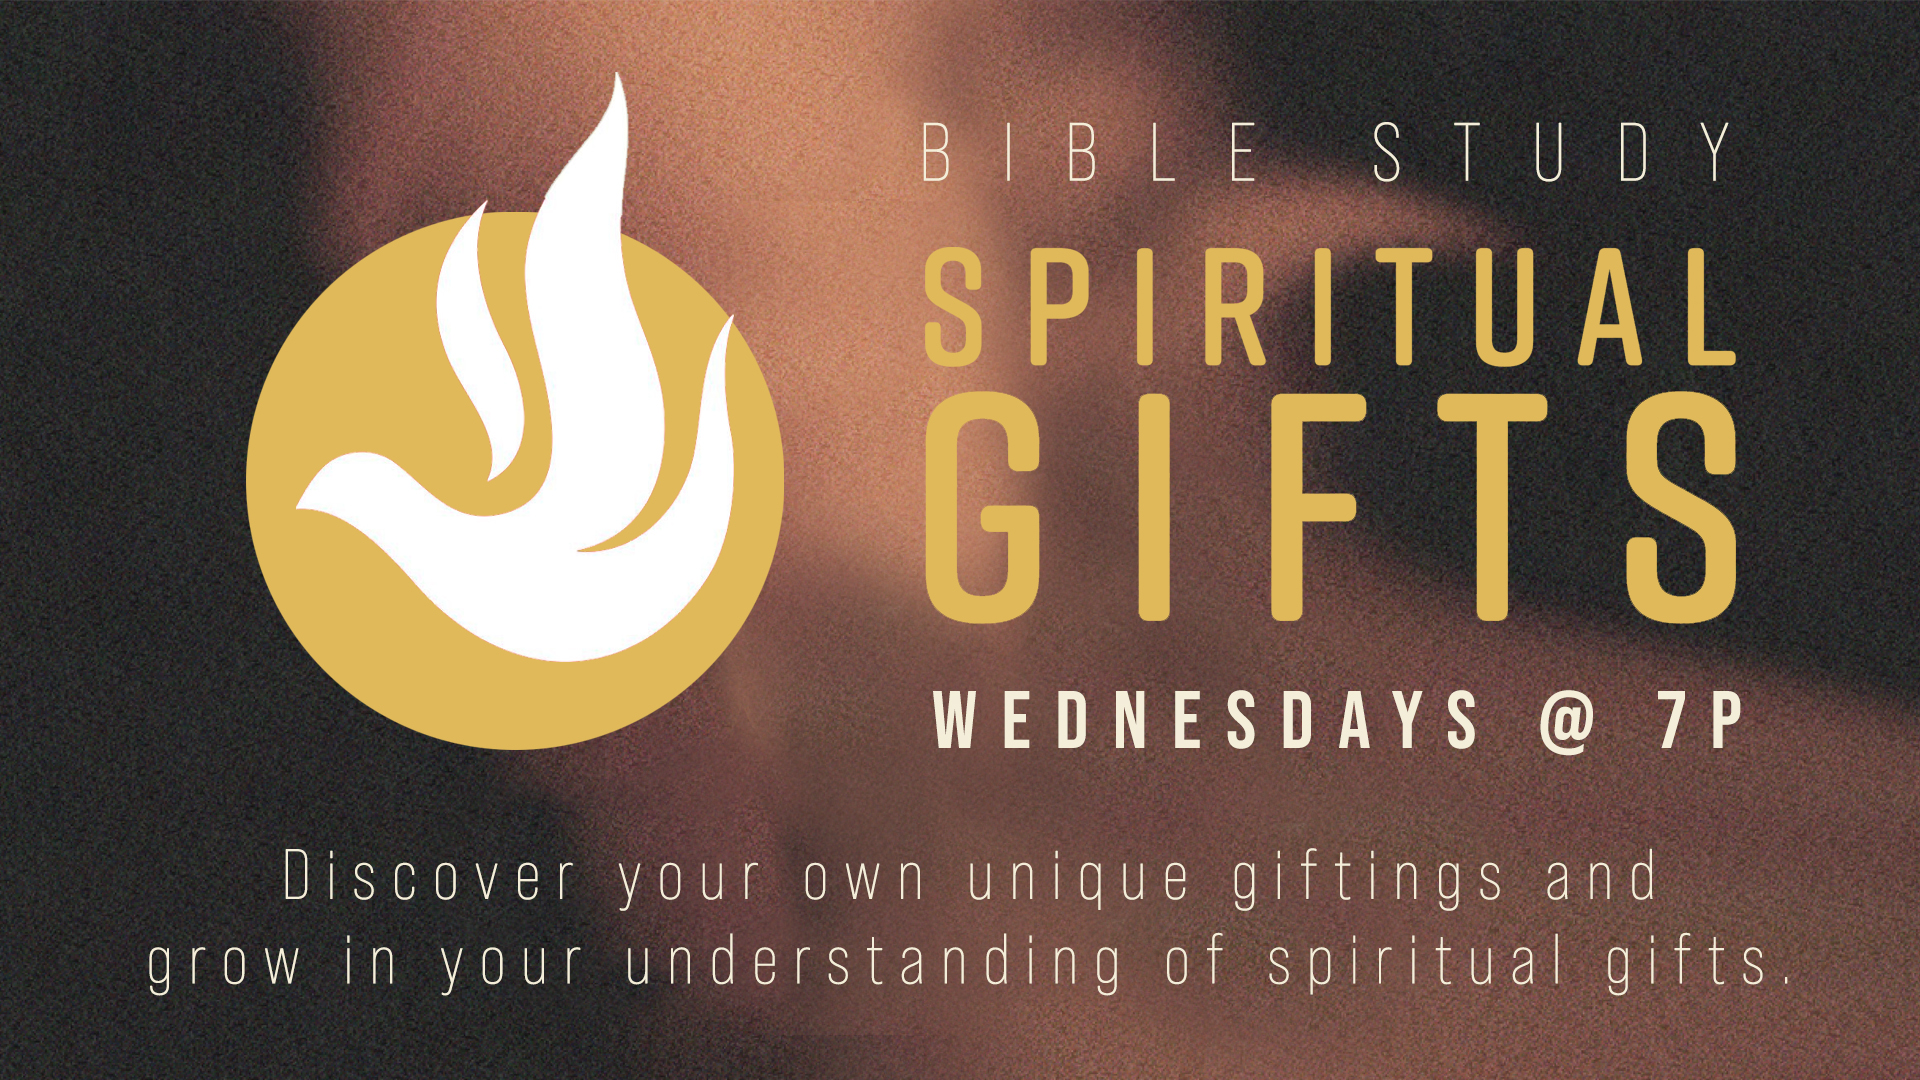 <b>Bible Study - Spiritual Gifts</b>